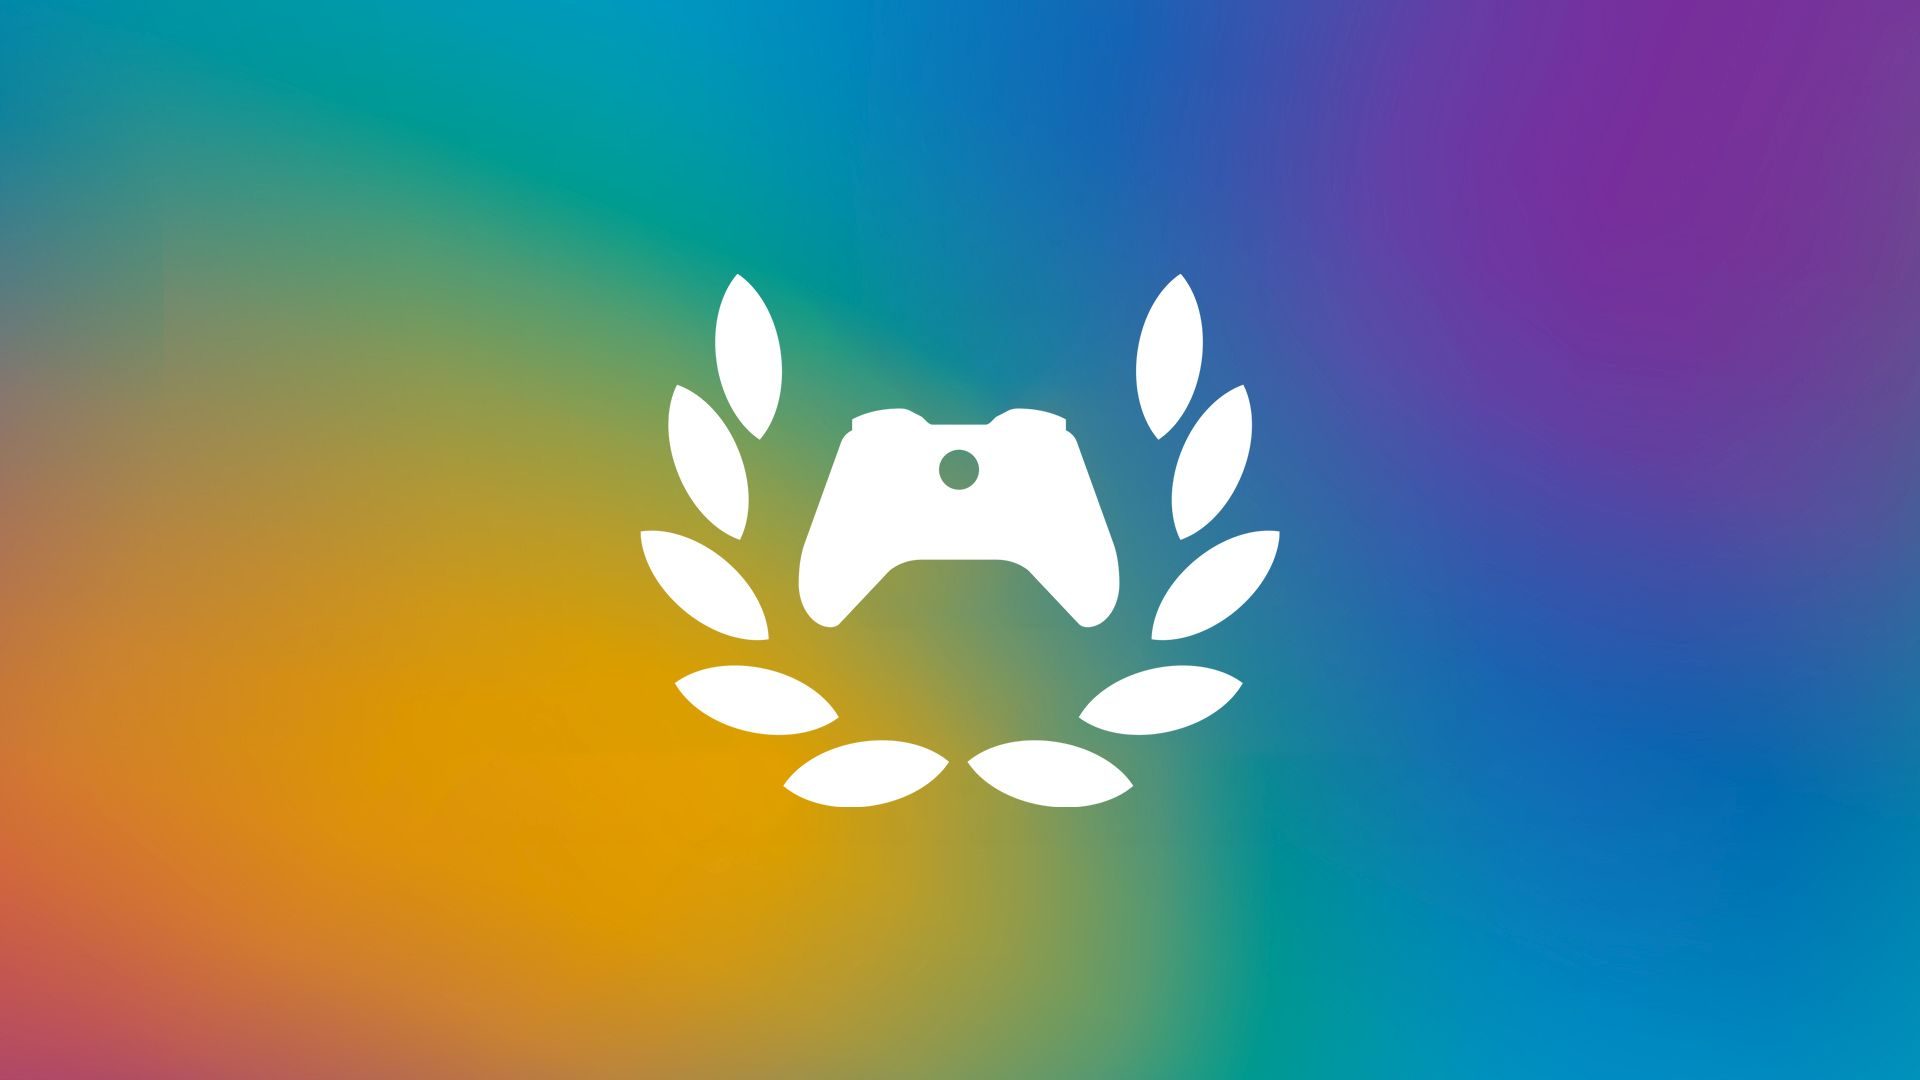 xa-logo-with-blurred-rainbow-1920x1080-1-f8e34479b72a7e452aef-8815146